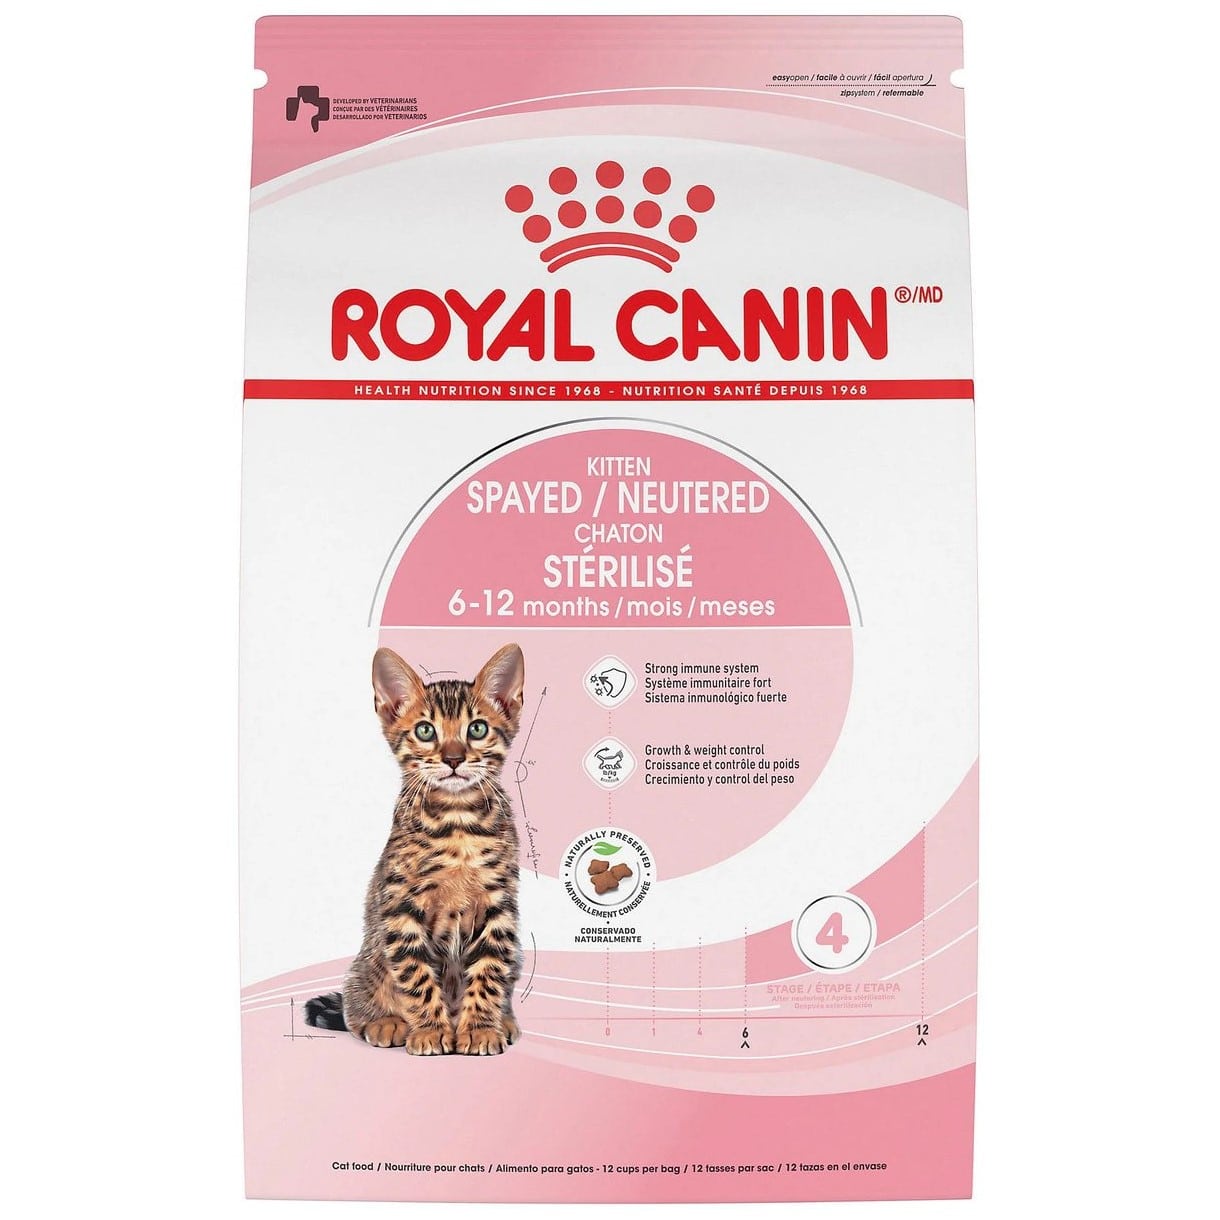 Royal Canin Feline Health Nutrition Kitten Spayed/Neutered Dry Cat Food